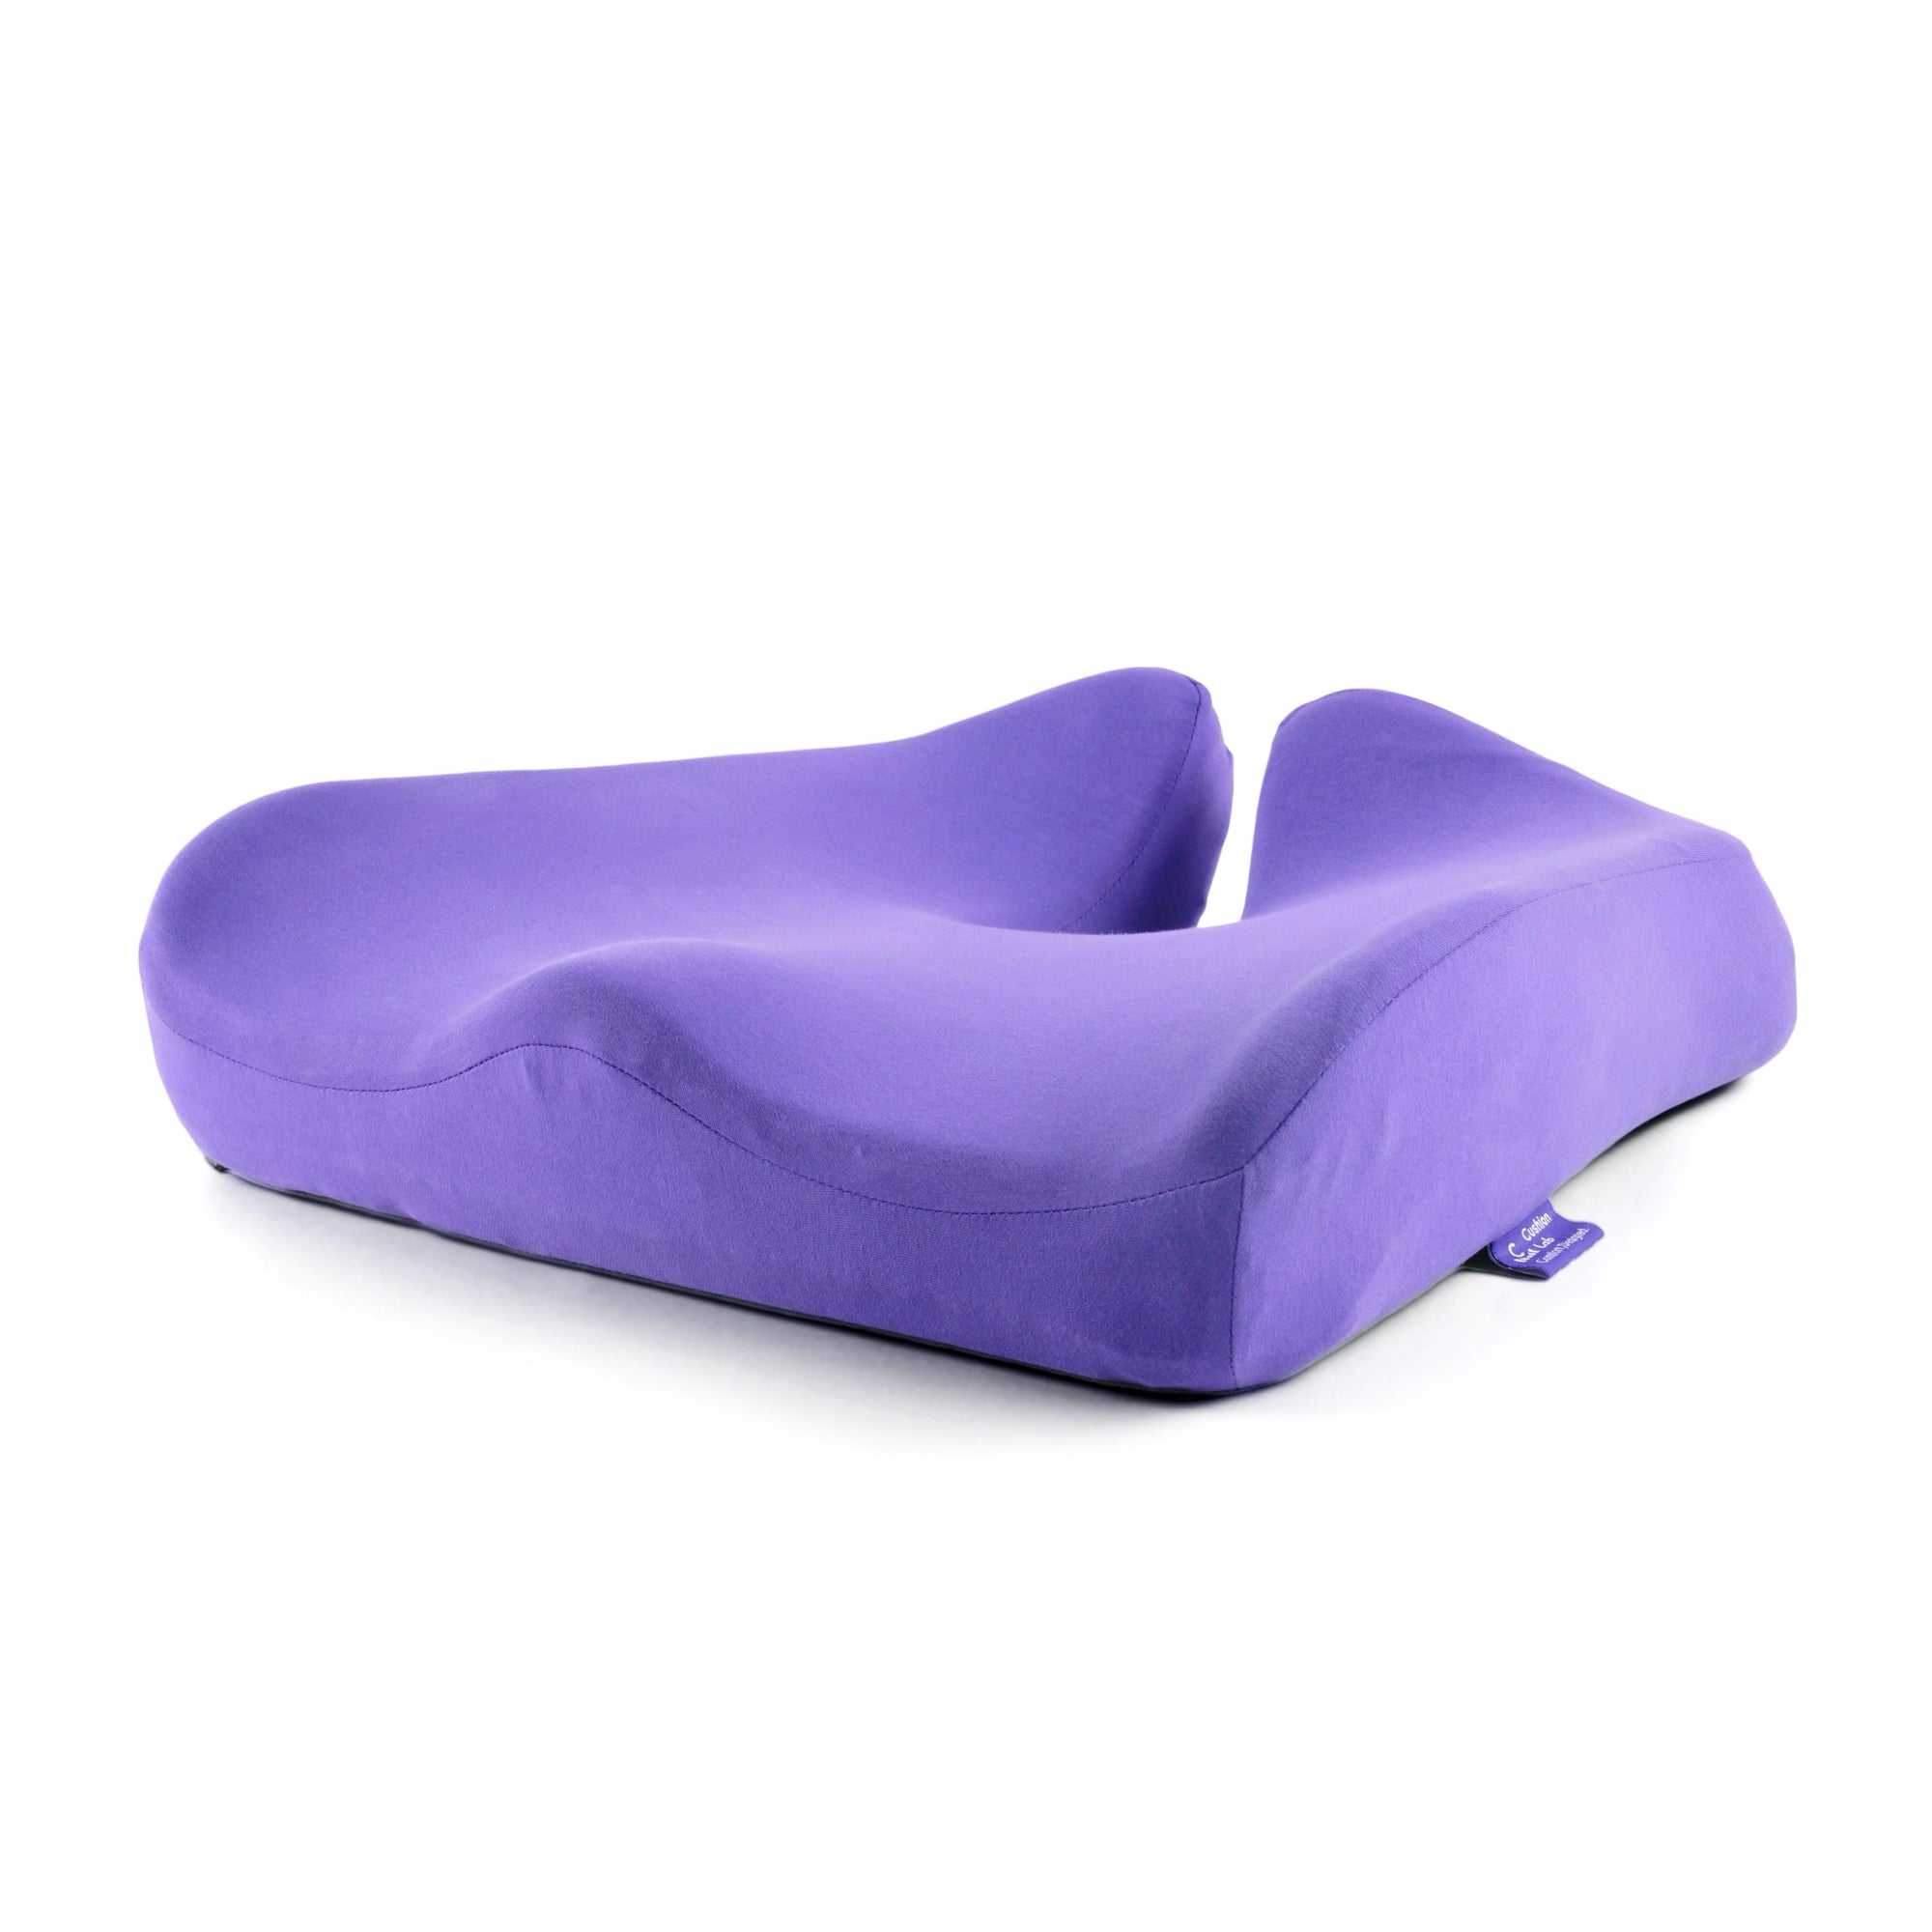 Purple Gel Seat Cushion for Long Sitting ,Back, Sciatica, Hip,Wheelchair Pressure Relief,Tailbone Pain Relief Cushion, Gel Seat Cushion for Office